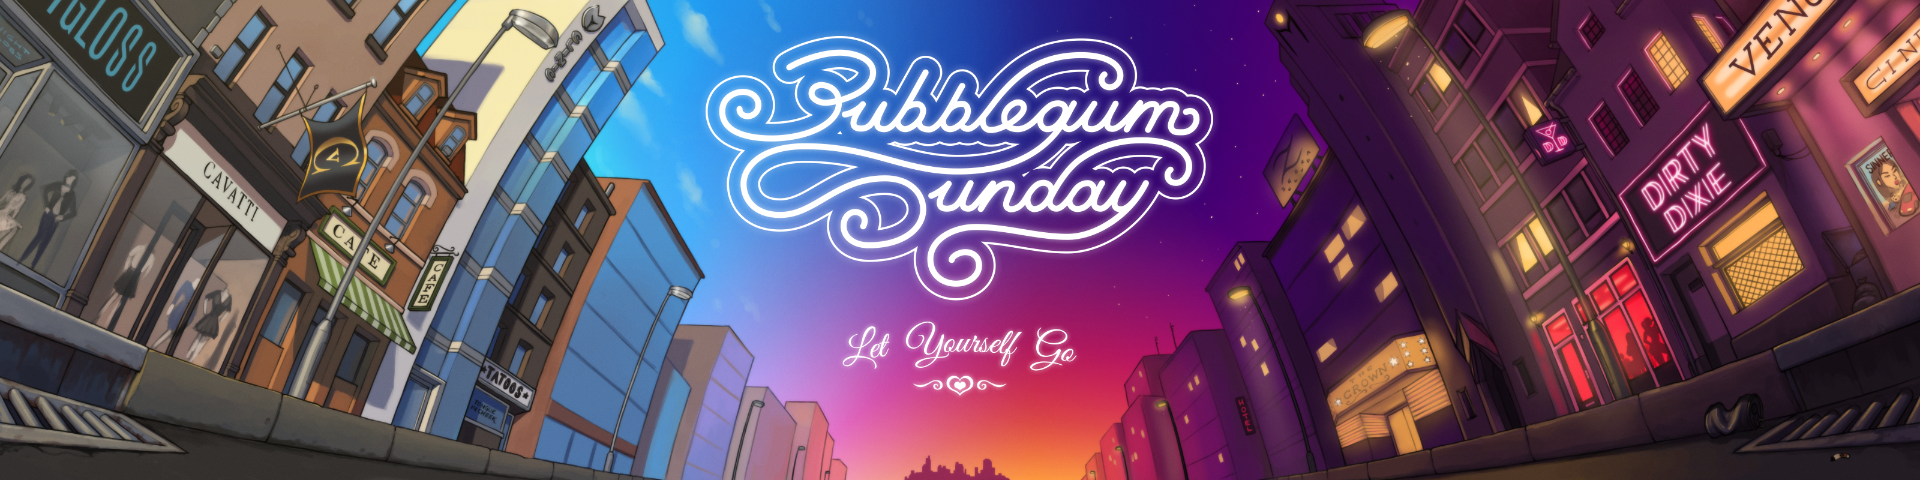 Bubblegum Sunday [Old]